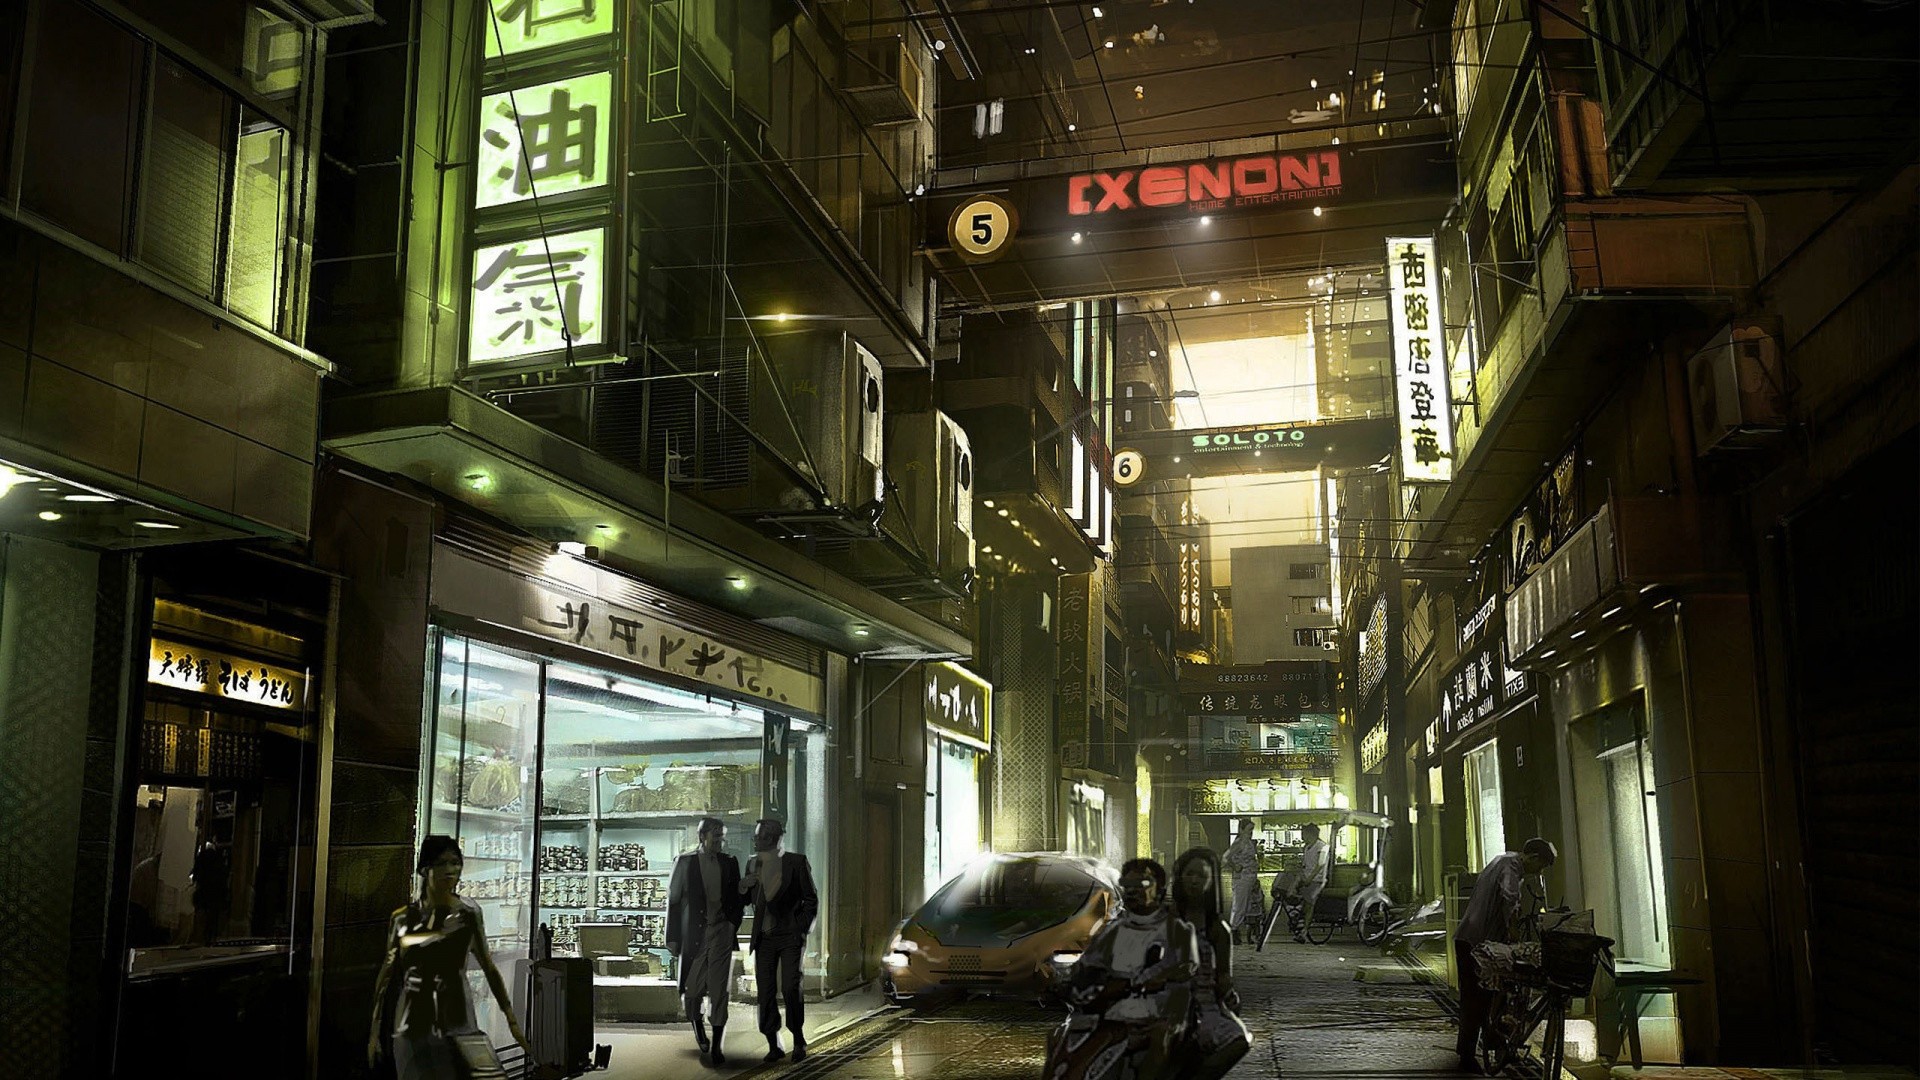 General 1920x1080 futuristic cyberpunk city Japan Asia futuristic city artwork science fiction urban street Deus Ex: Human Revolution PC gaming concept art video game art